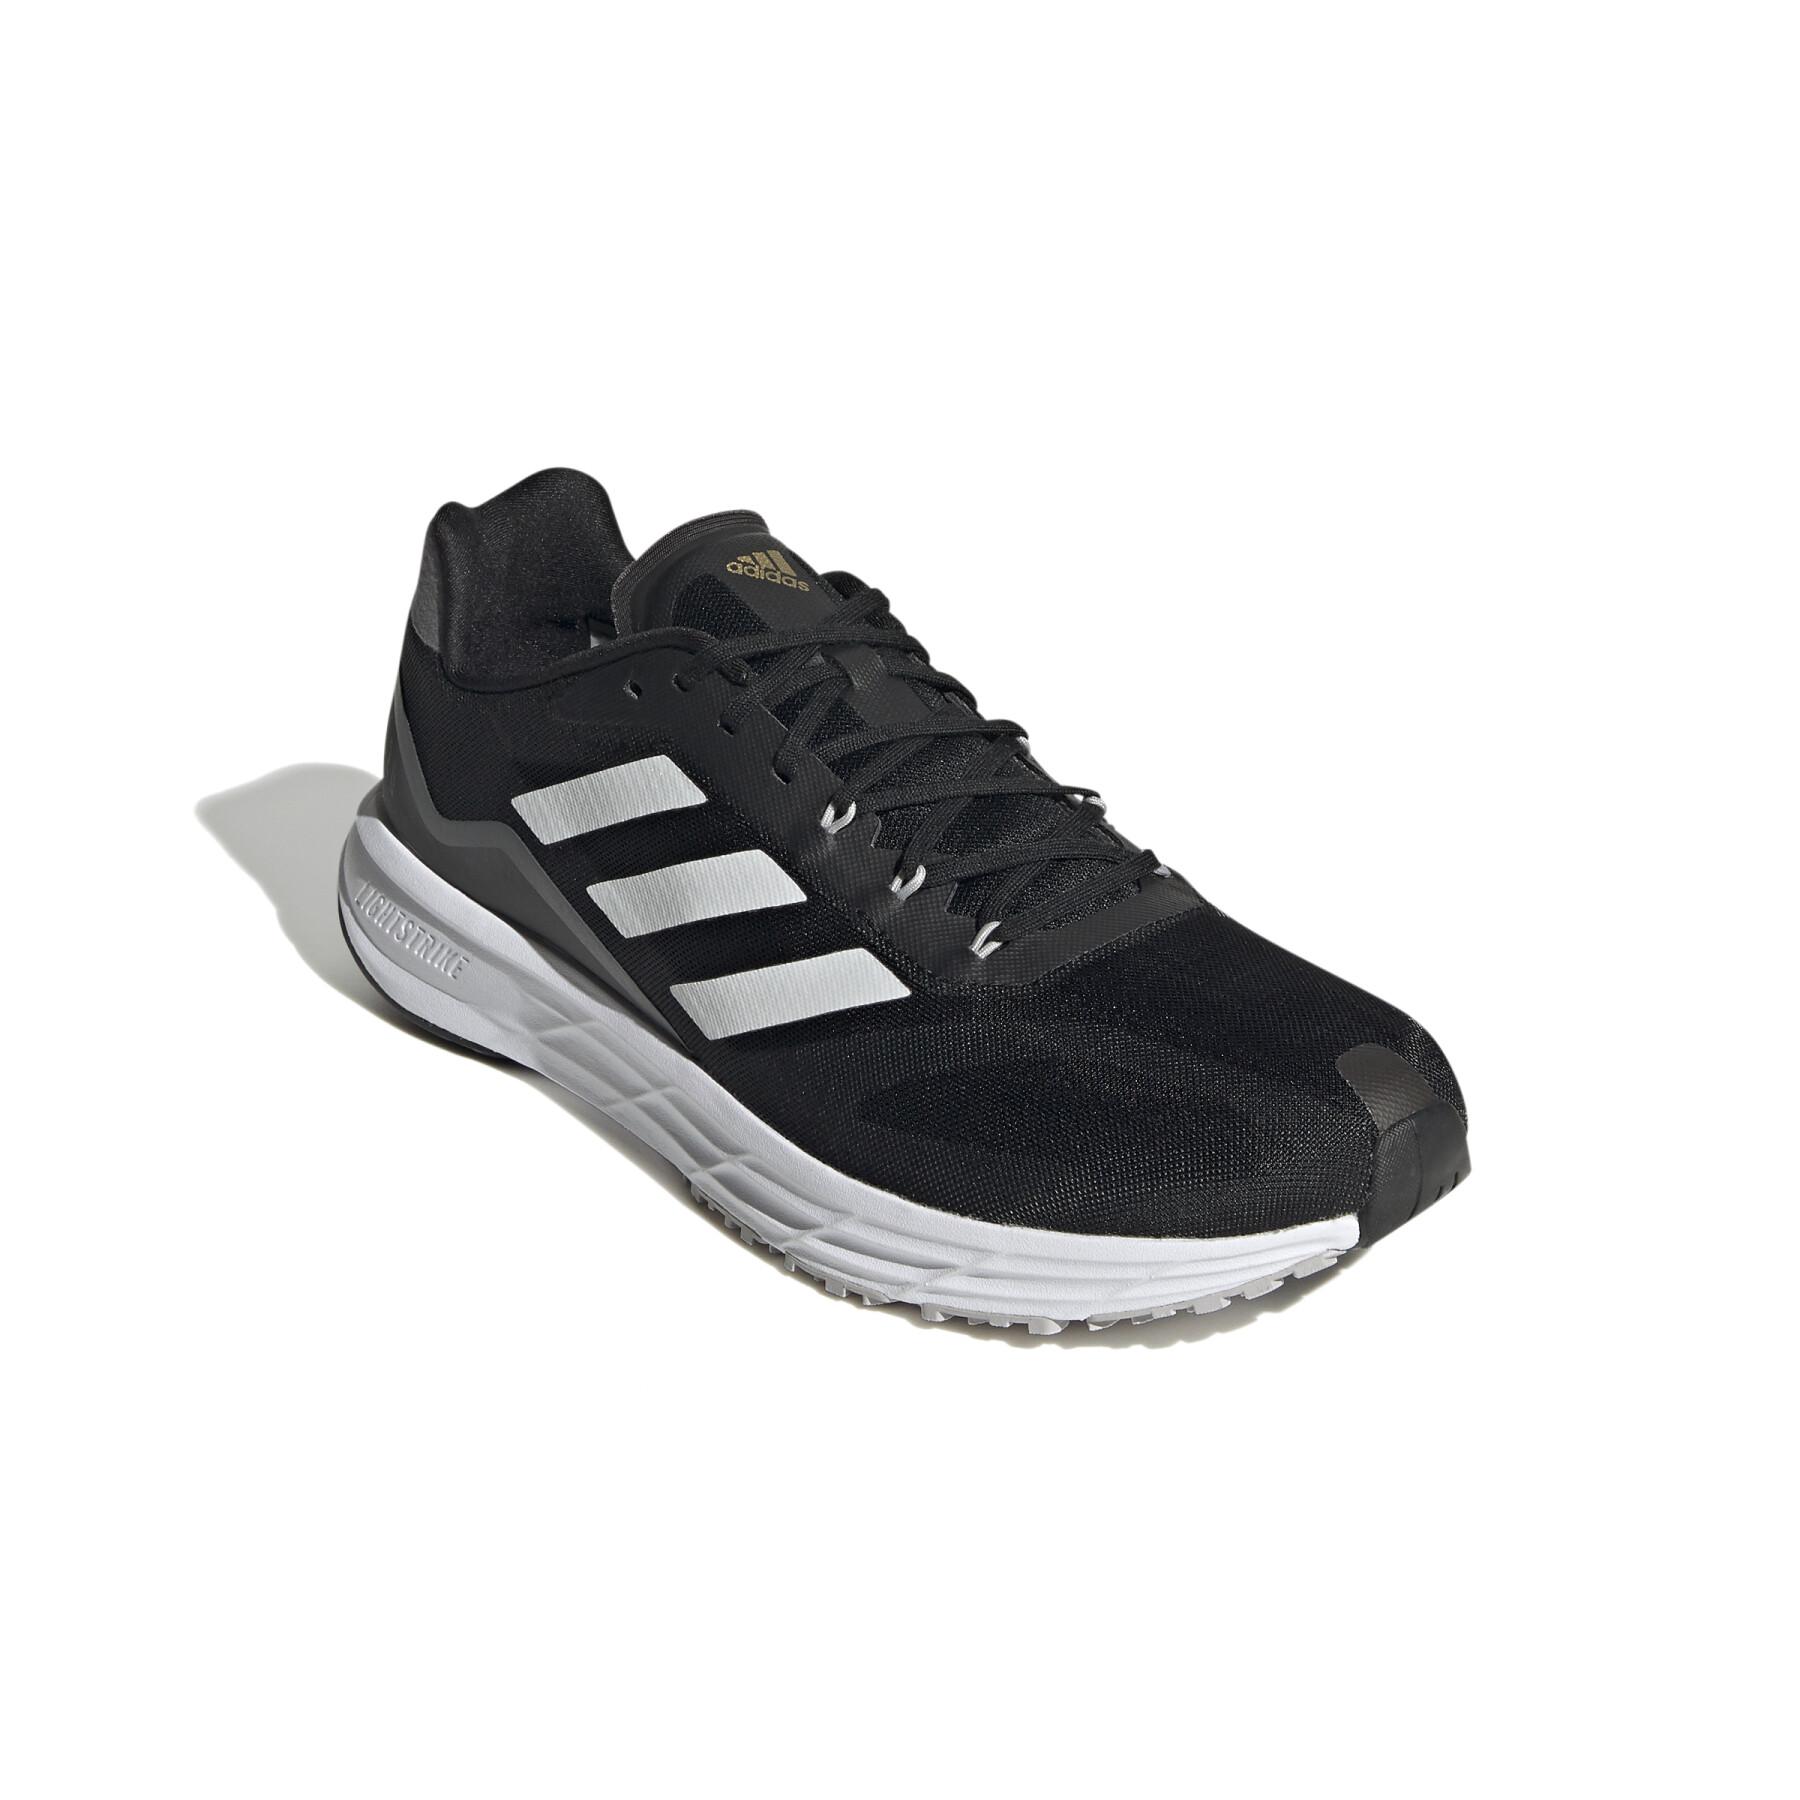 Chaussures de running adidas SL20.2